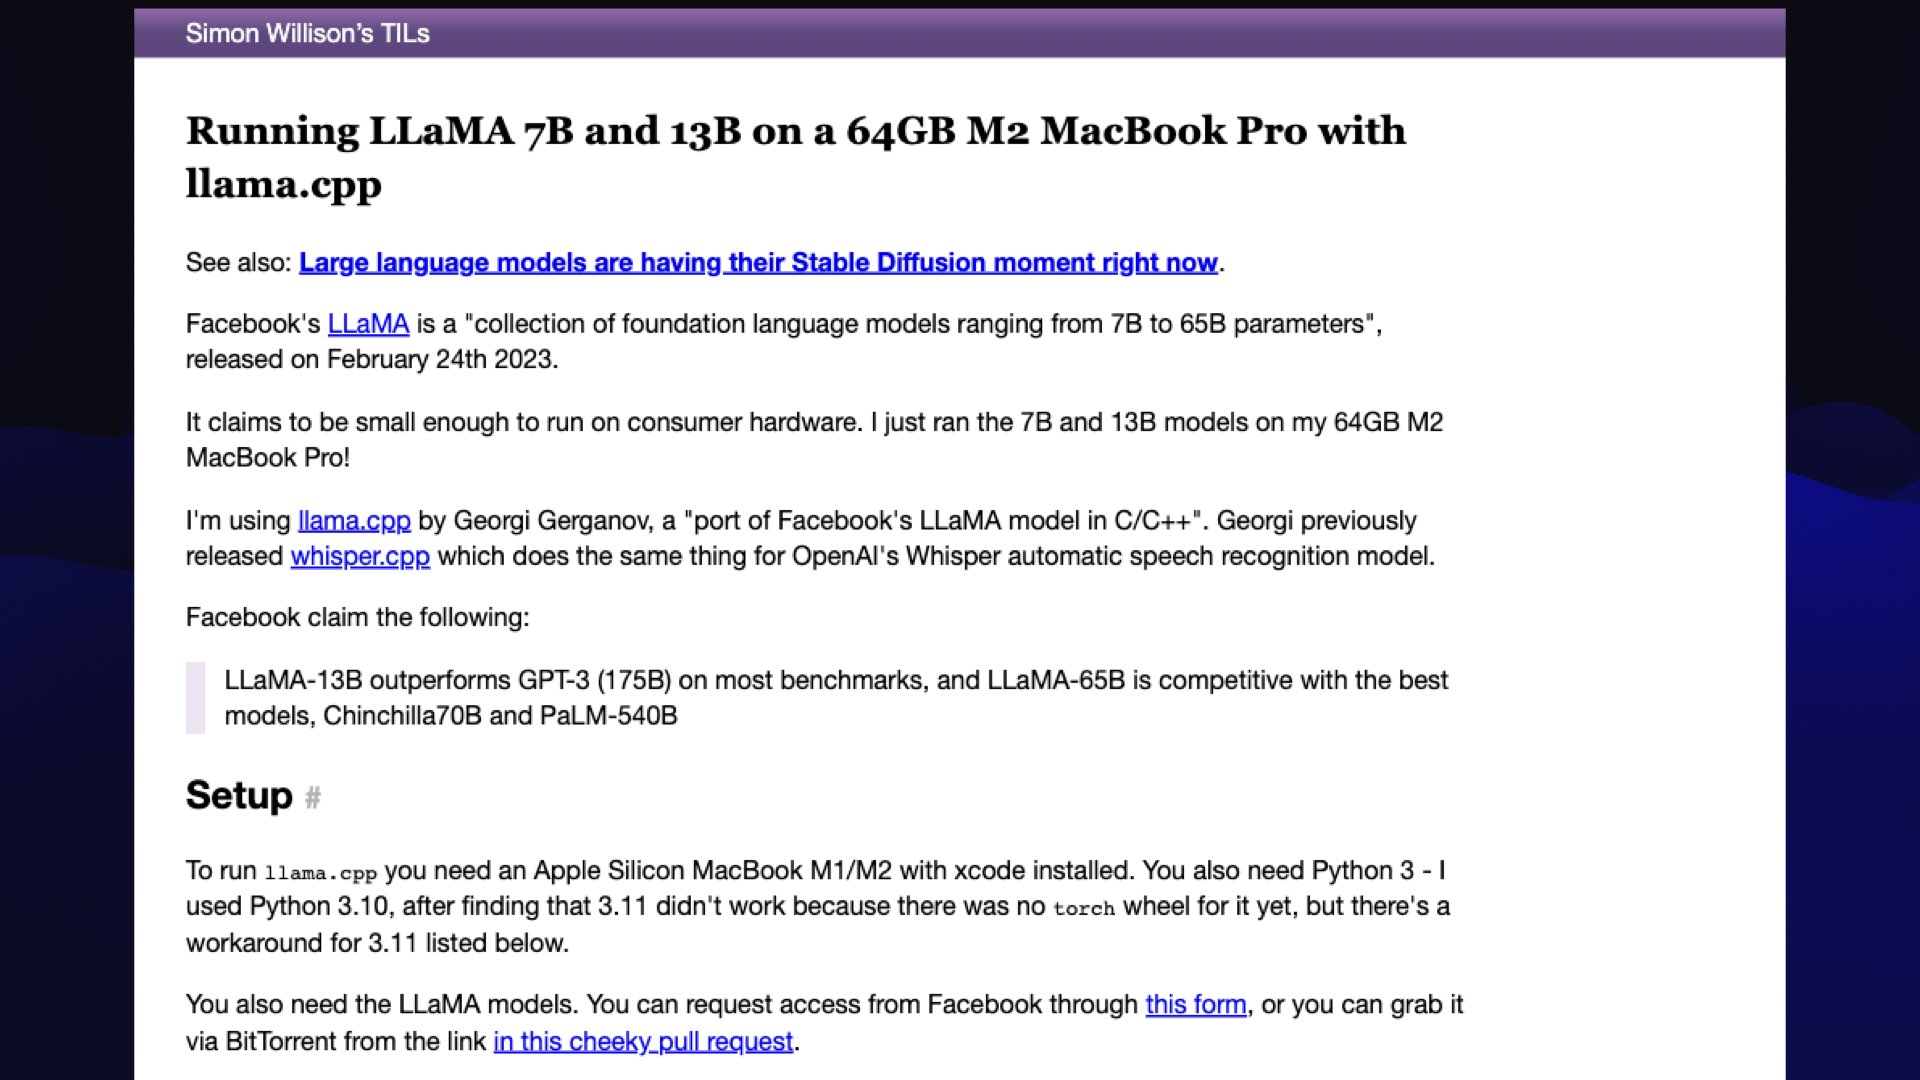 Simon Willison's TILs: Running LLaMA 7B and 13B on a 64GB M2 MacBook Pro with llama.cpp